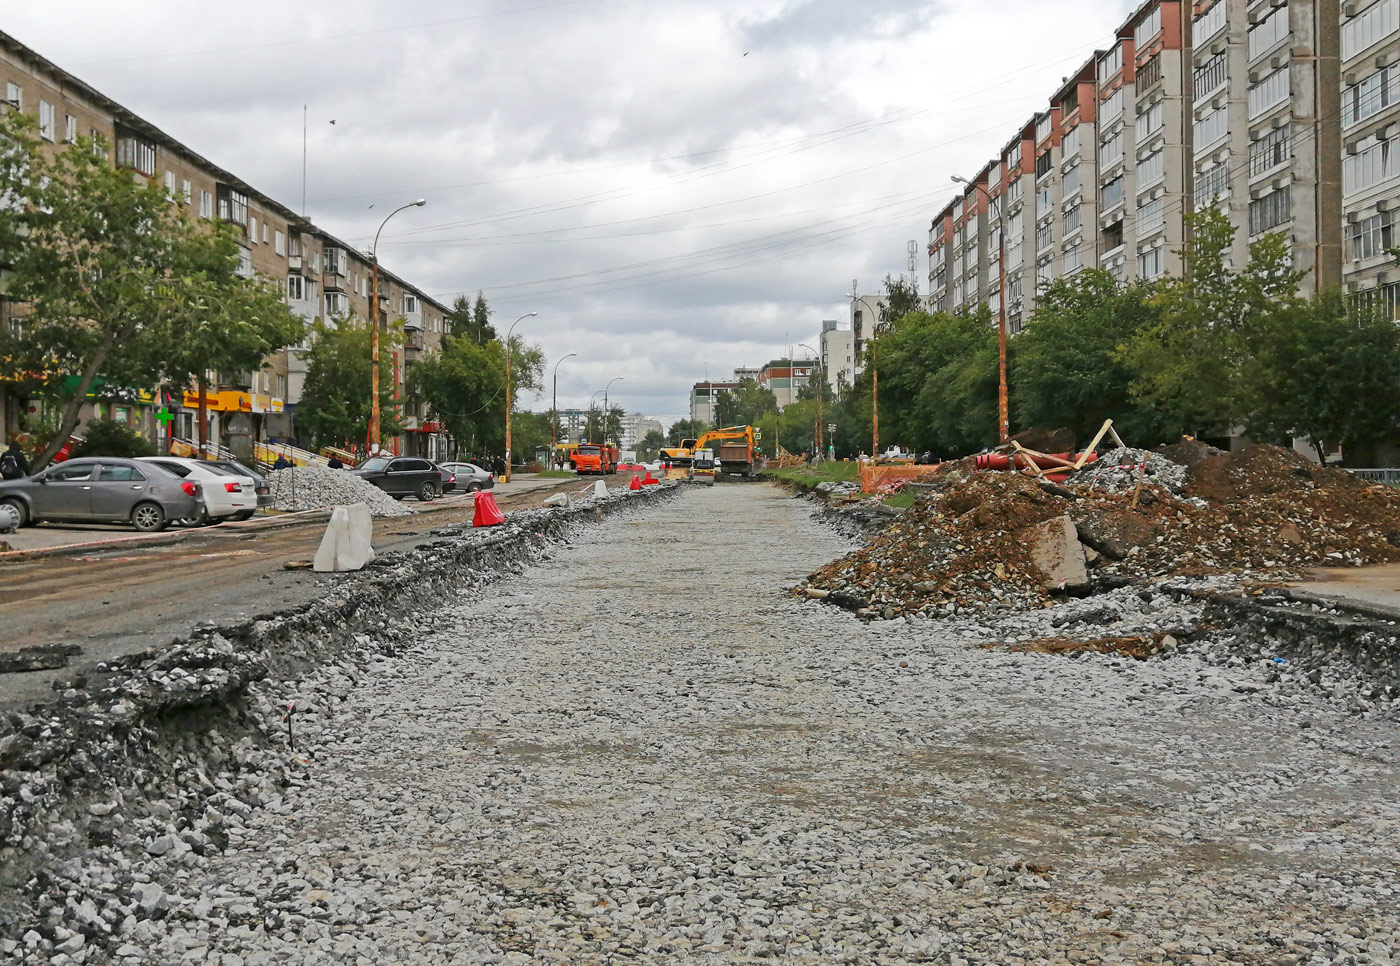 Jekatyerinburg — The construction of a tram line Ekaterinburg — Verhnyaya Pyshma; Verkhniaya Pyshma — The construction of a tram line Ekaterinburg — Verhnyaya Pyshma